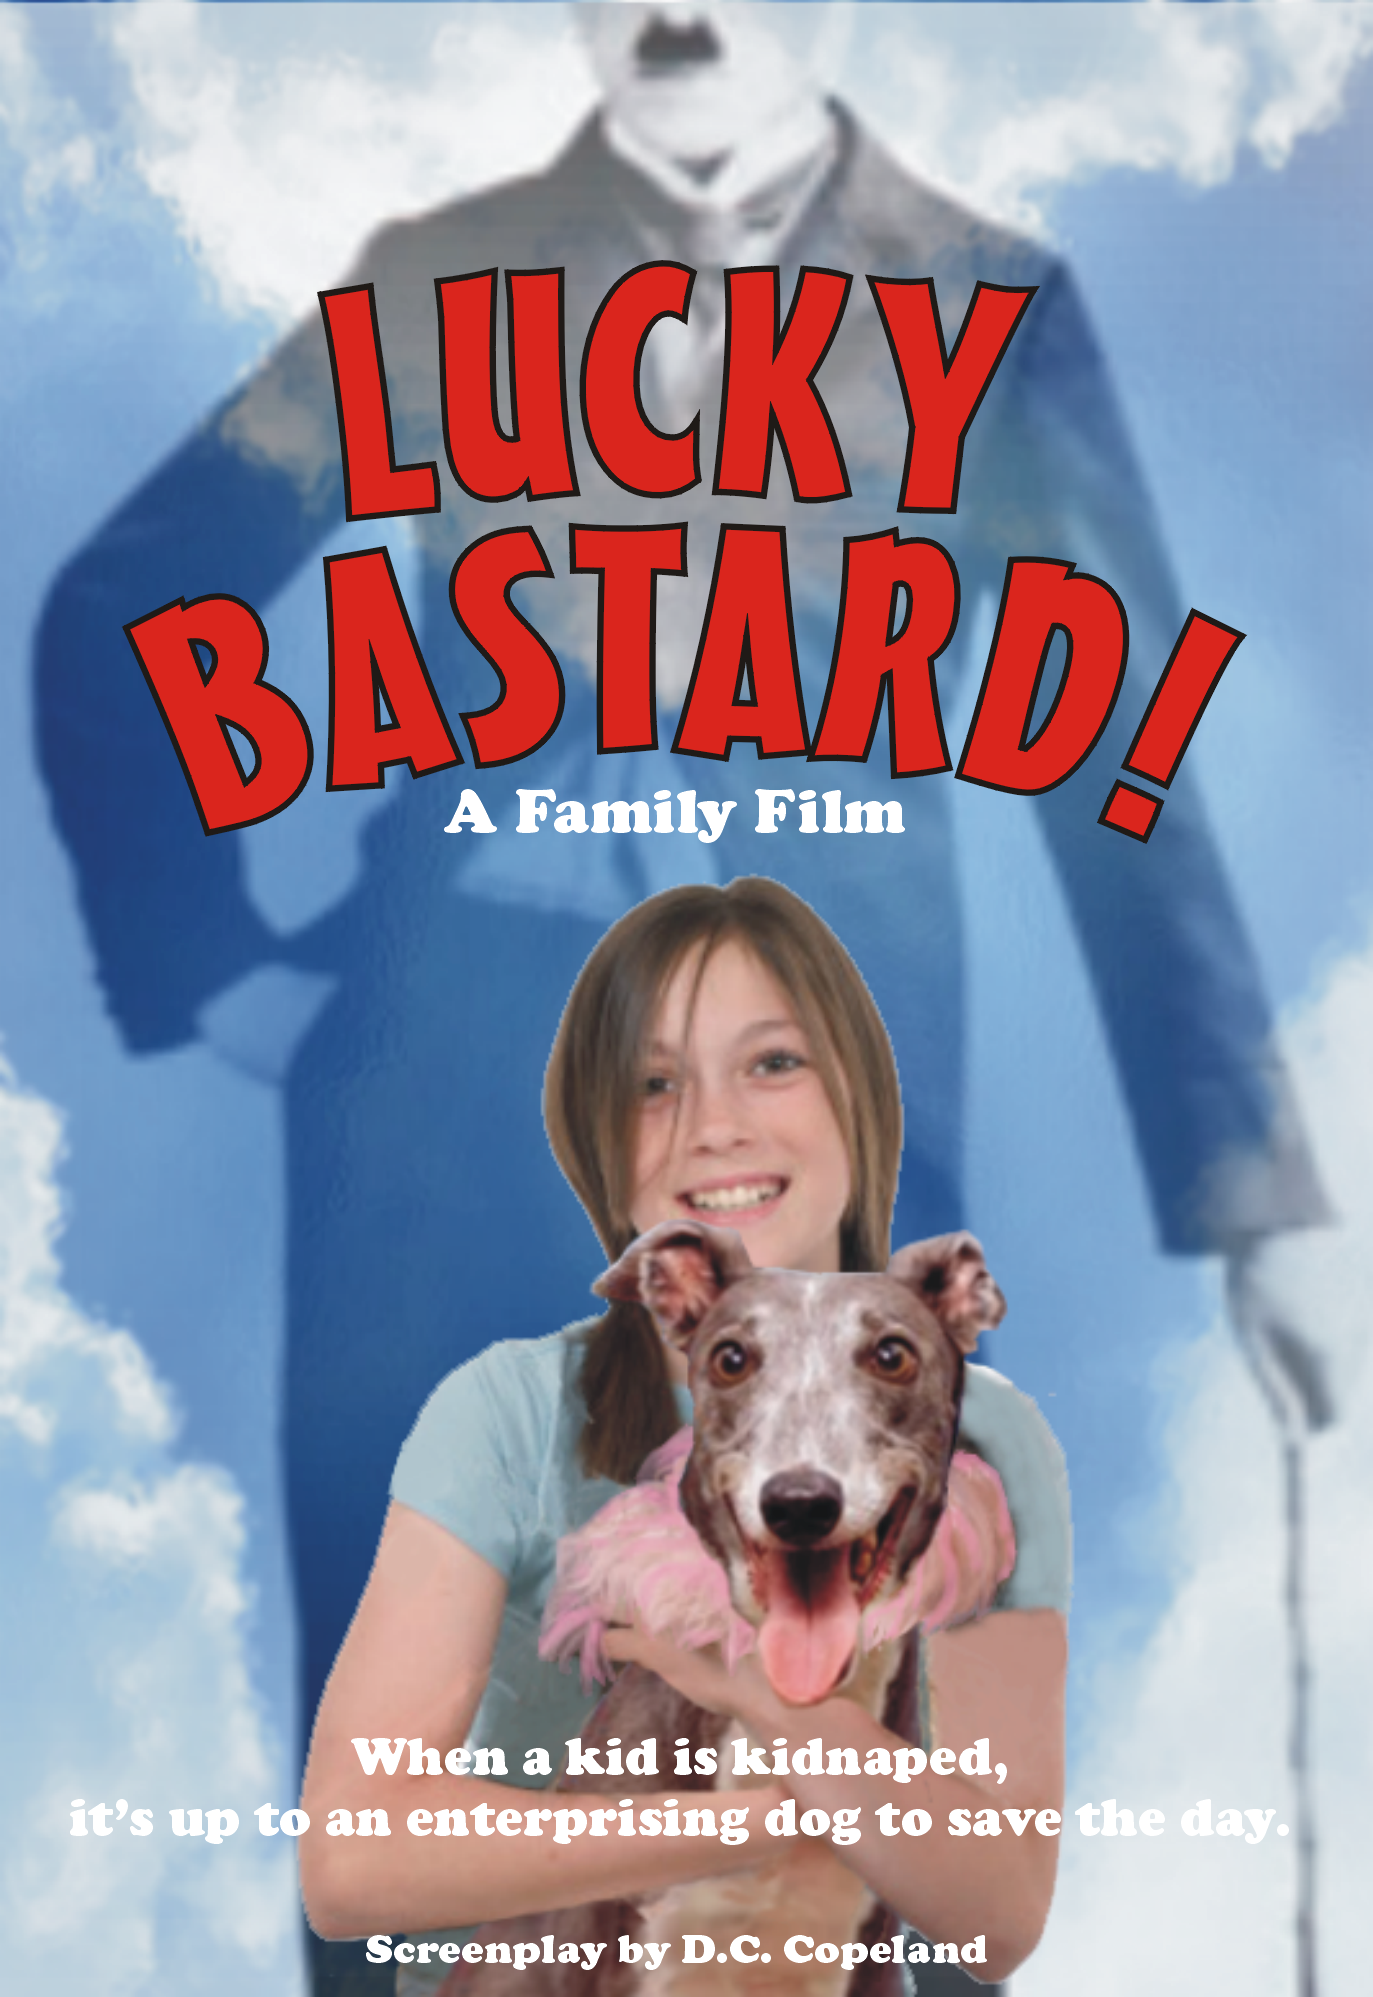 LUCKY BASTARD: A FAMILY FILM